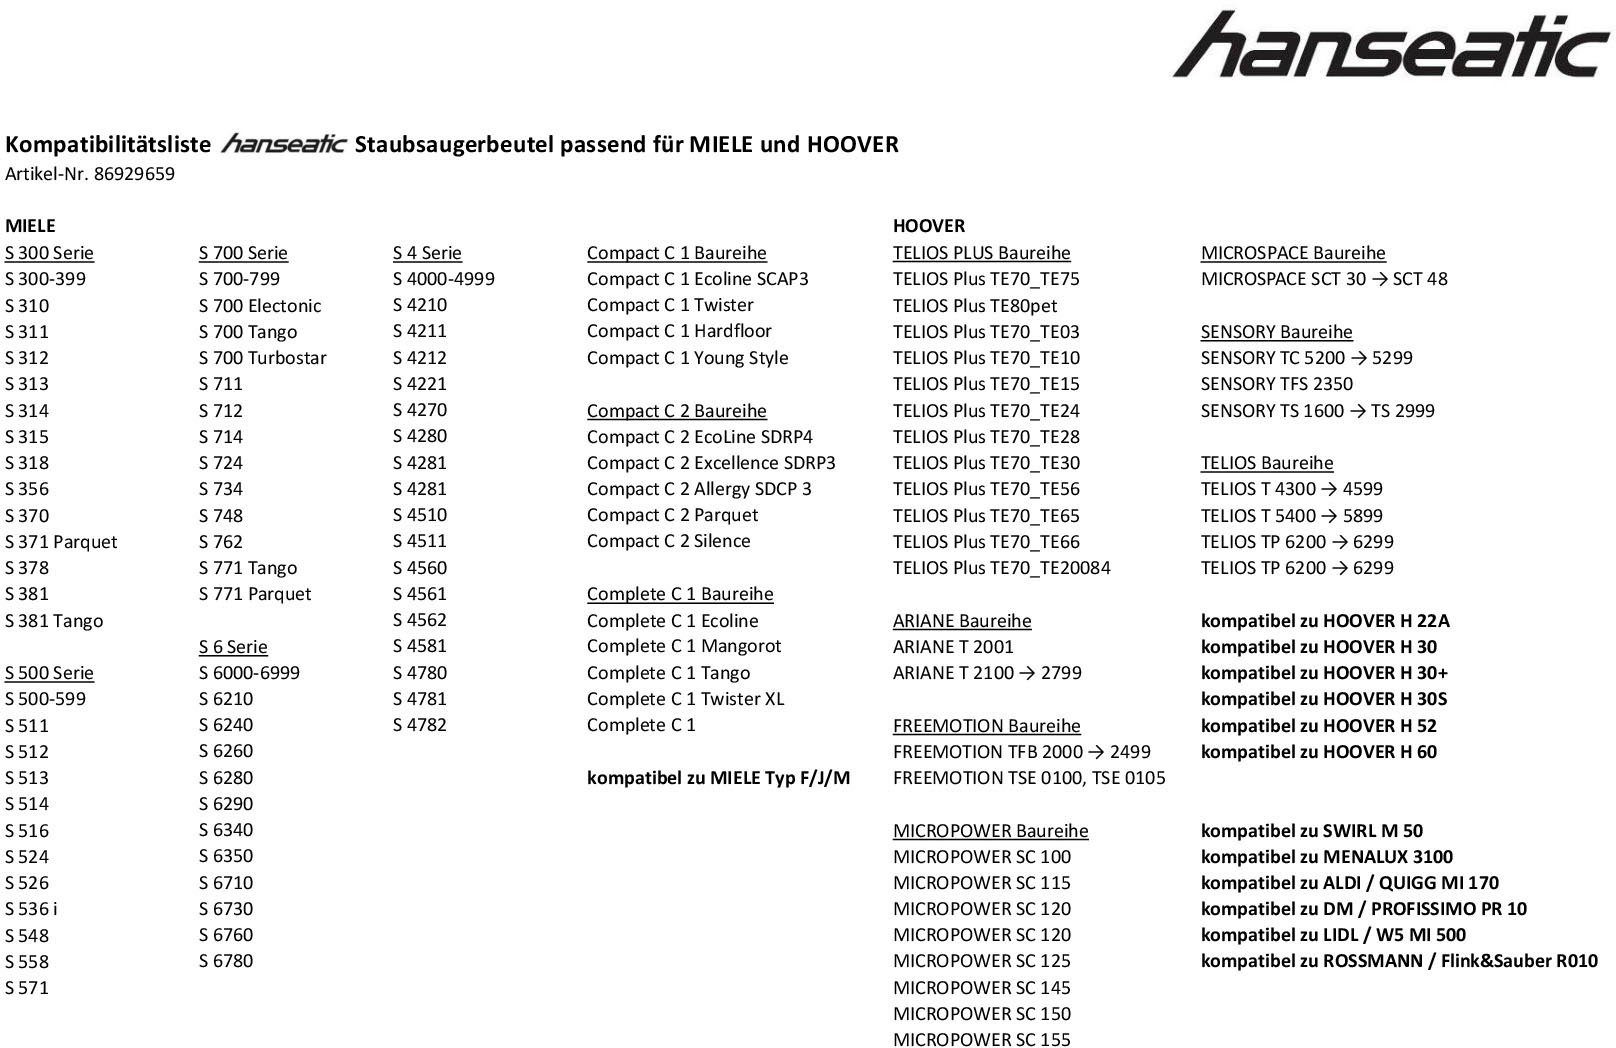 S6 4210 C1 S6210 Staubsaugerbeutel, S passend TE70_TE75 10er- TE70_TE75, Compact / S4210 für Staubsaugerbeutel, und Pack, Telios 10er-Pack, / MIELE Telios Plus und passend HOOVER -Baureihen Hanseatic S4 passend HOOVER für / HANSEATIC / MIELE Plus für